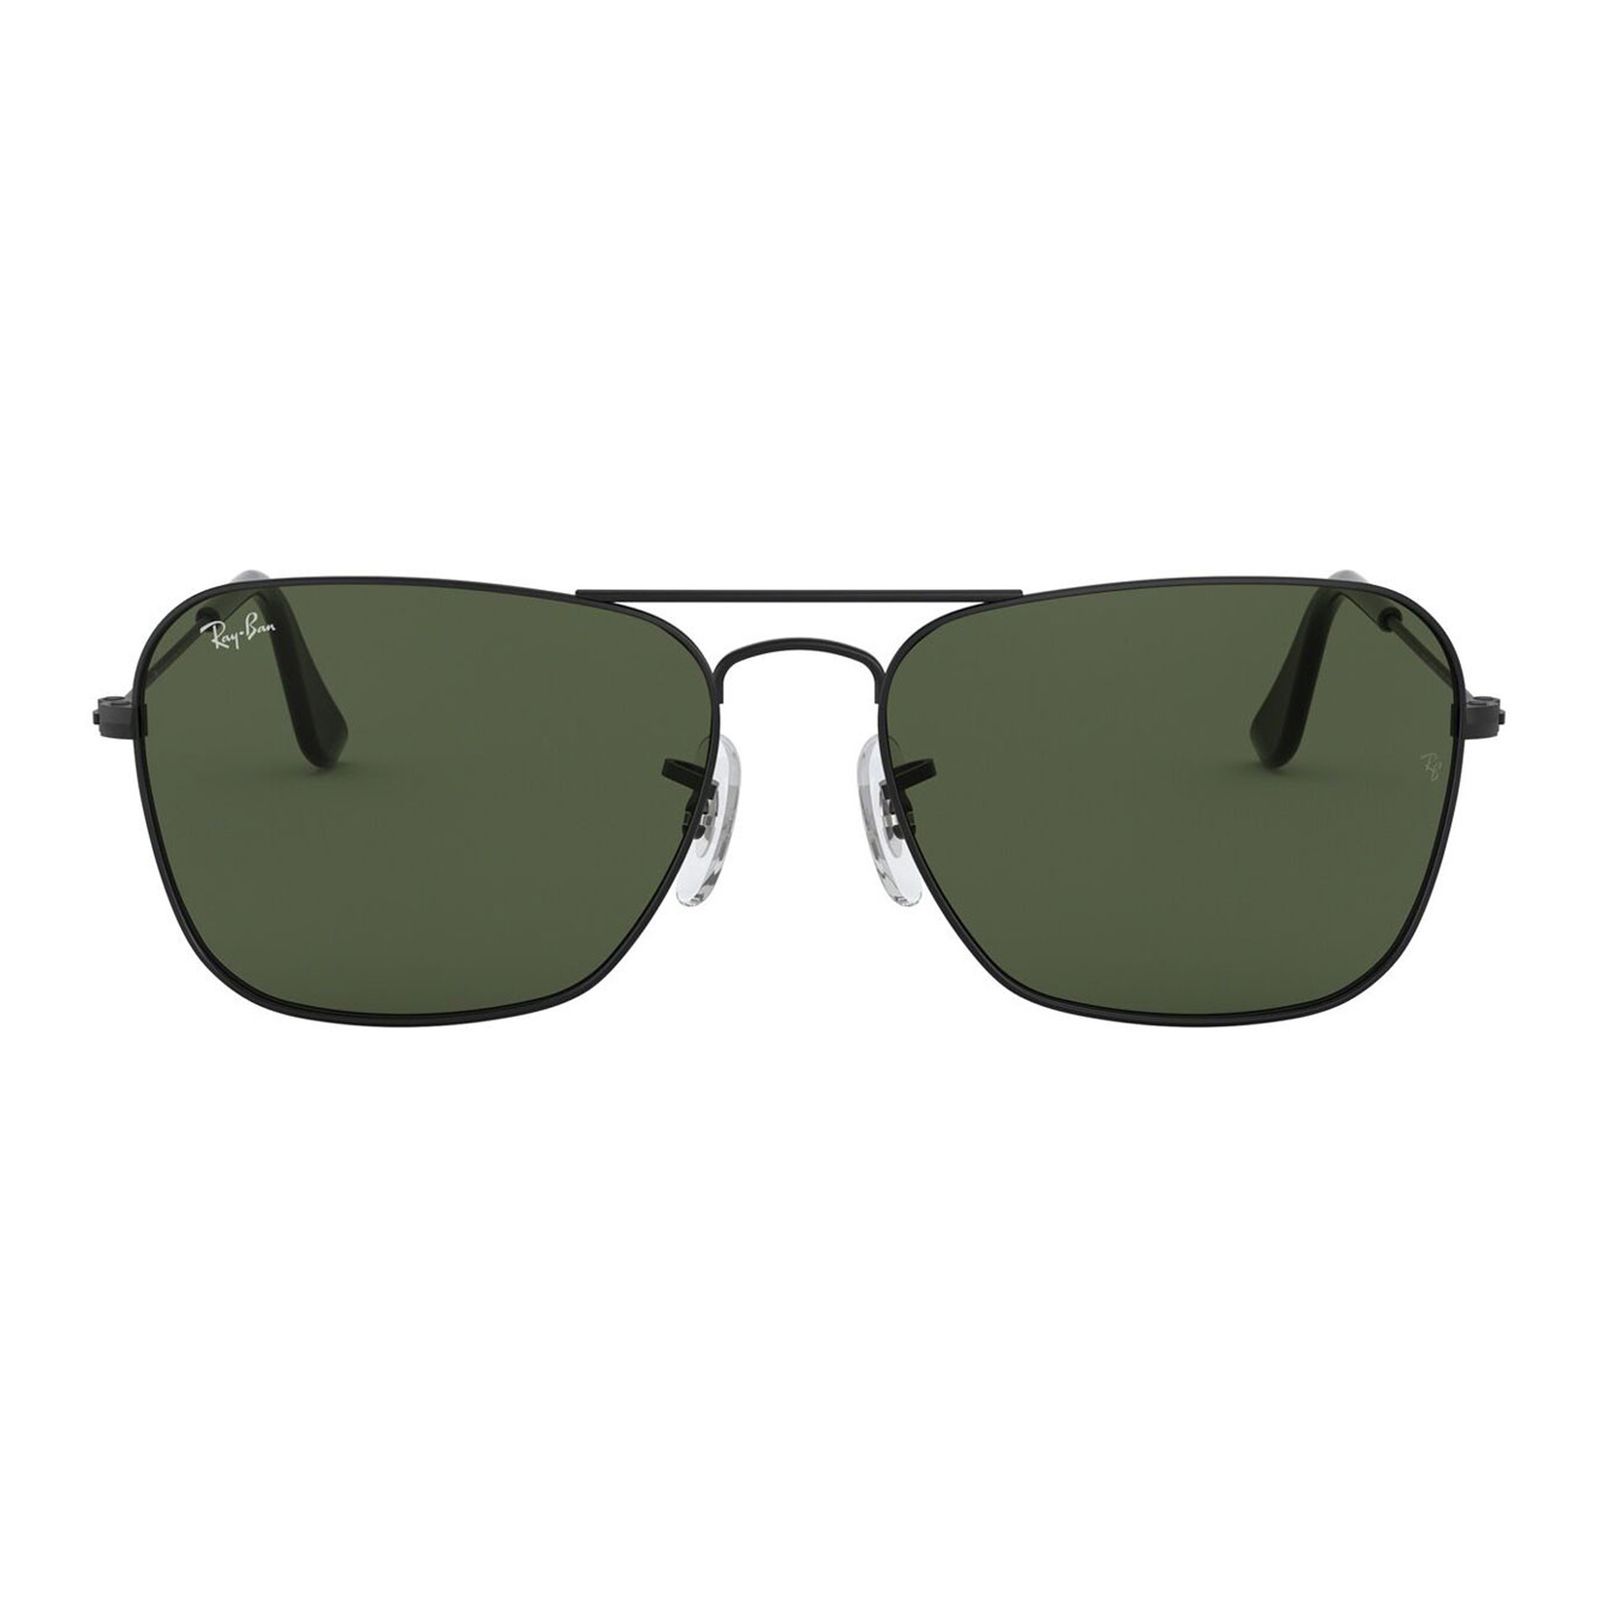 عینک آفتابی ری بن مدل 3136-002-58 - مشکی - 1